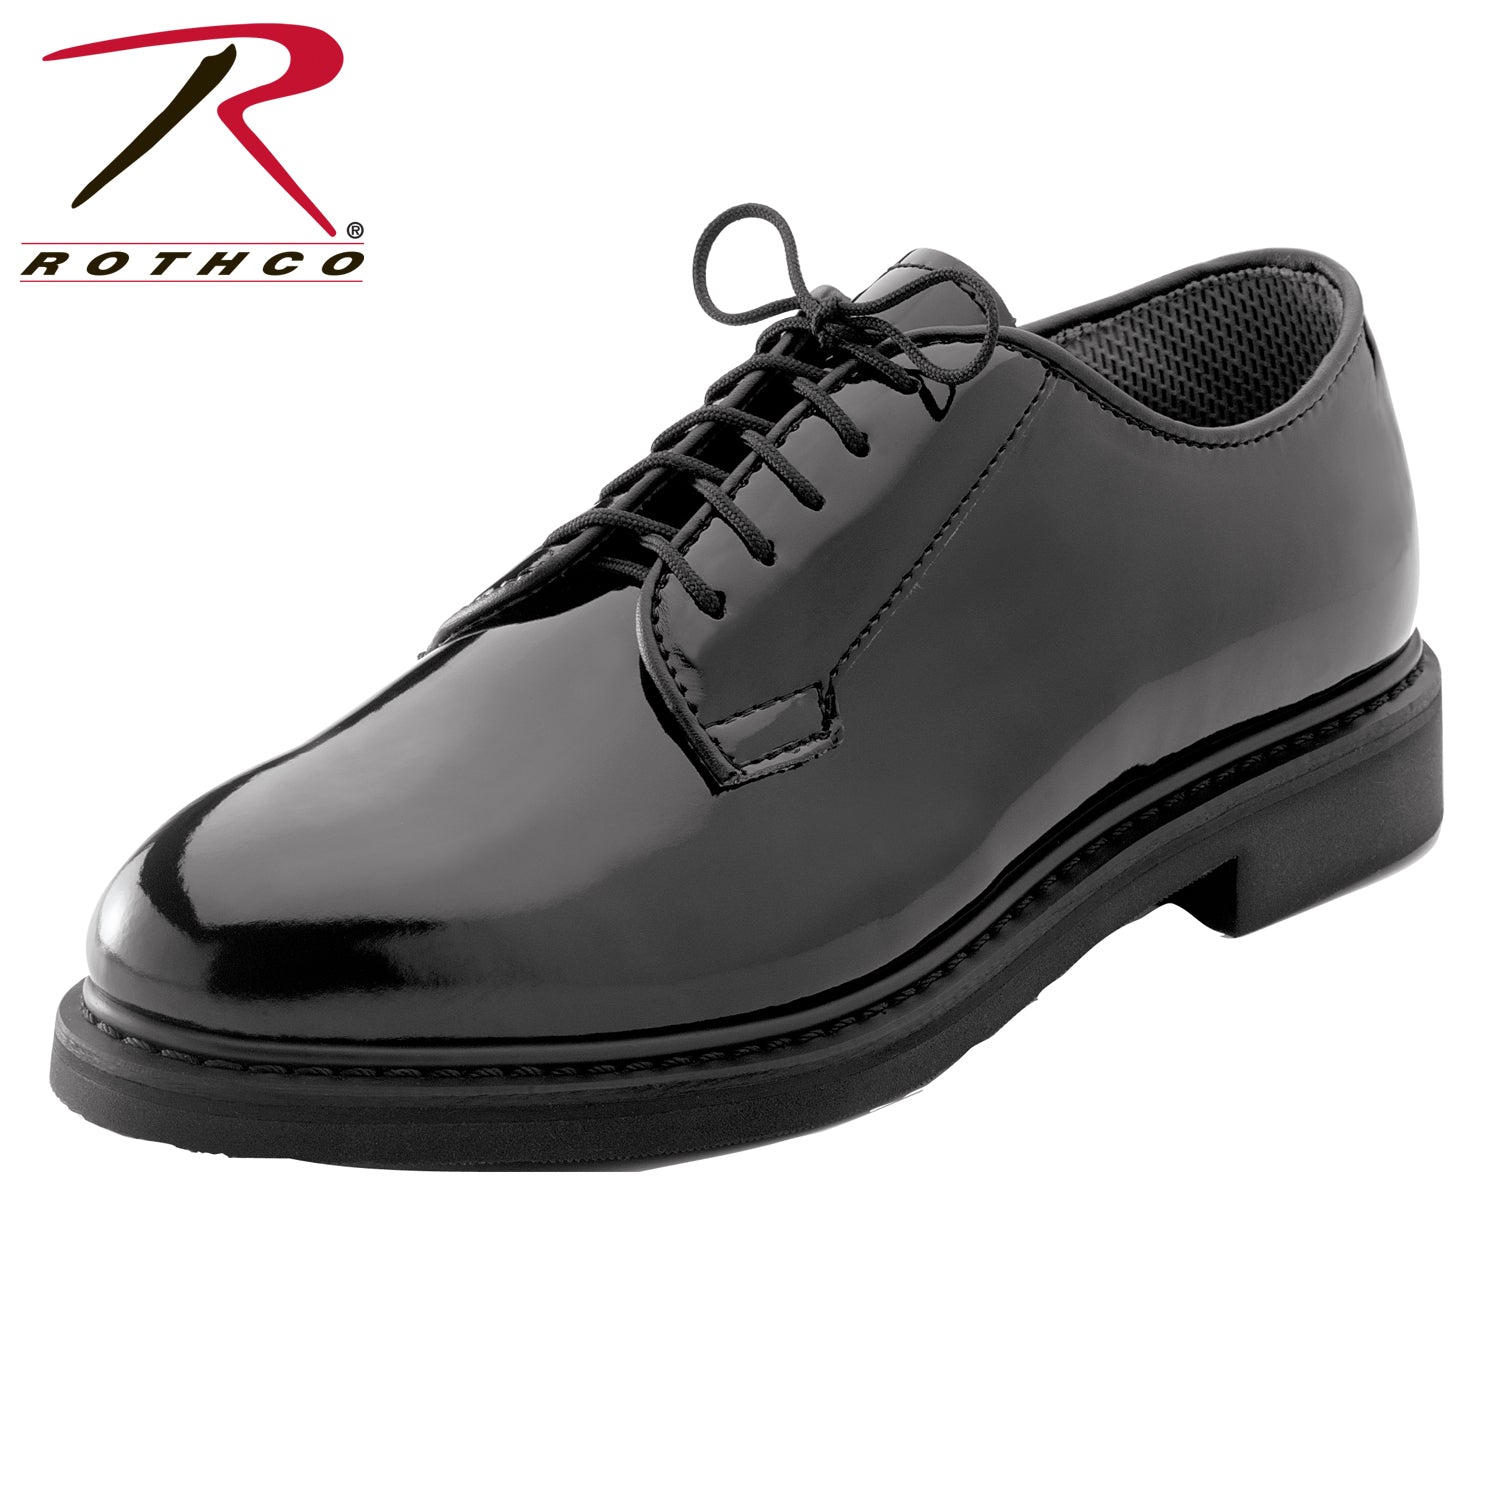 Rothco Uniform Hi-Gloss Oxford Dress Shoe - red-diamond-uniform-police-supply